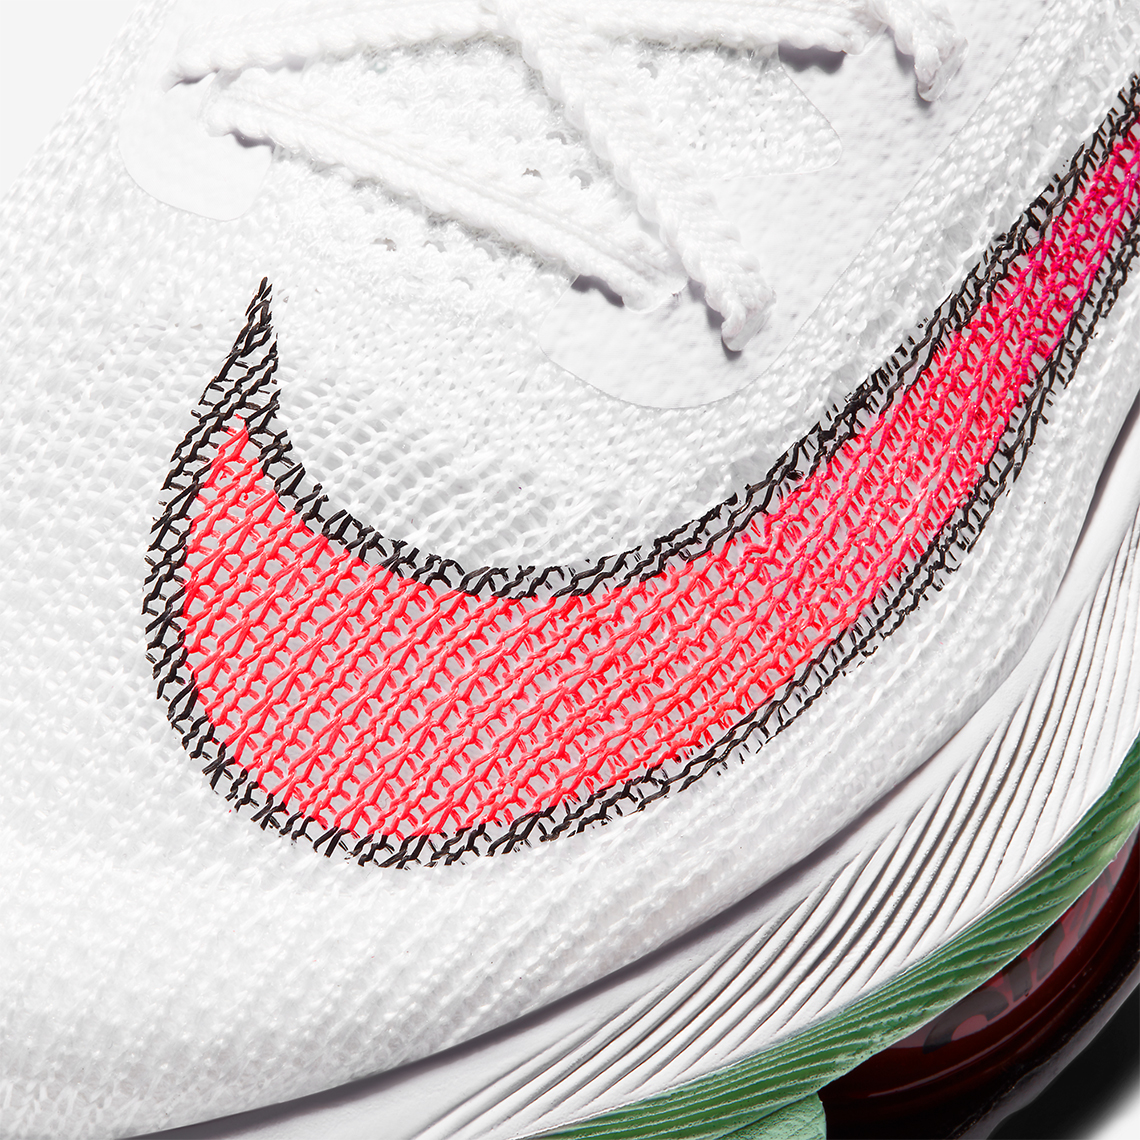 Nike Alphafly NEXT% Watermelon CI9925-100 | SneakerNews.com